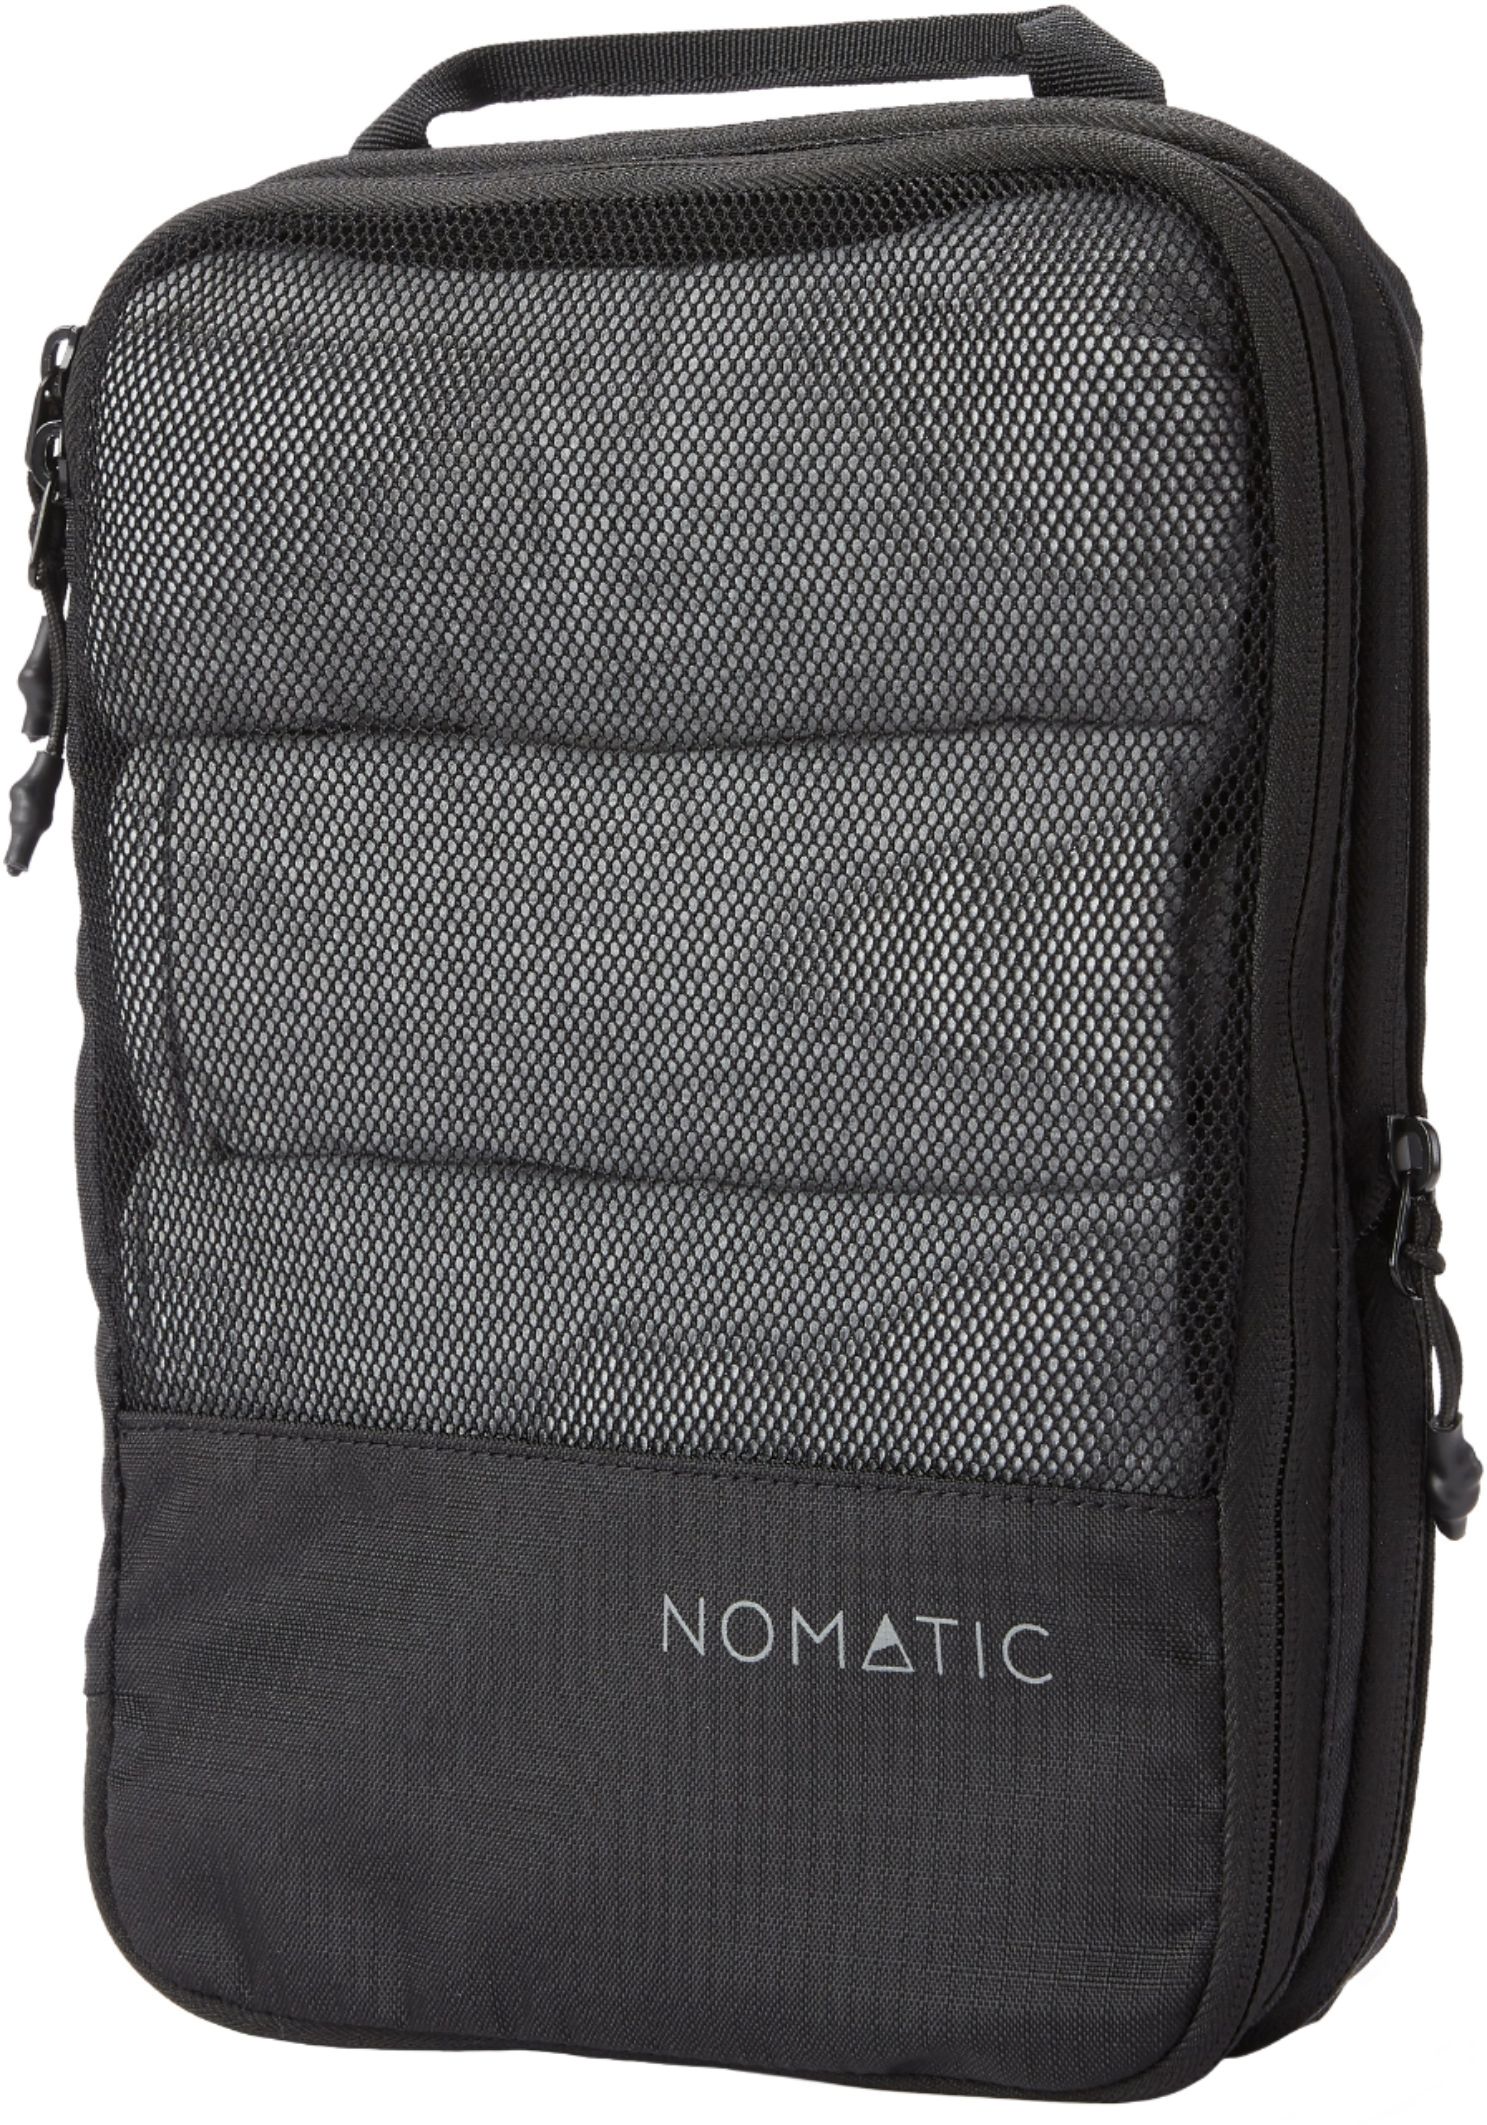 Nomatic - Large Toiletry Bag